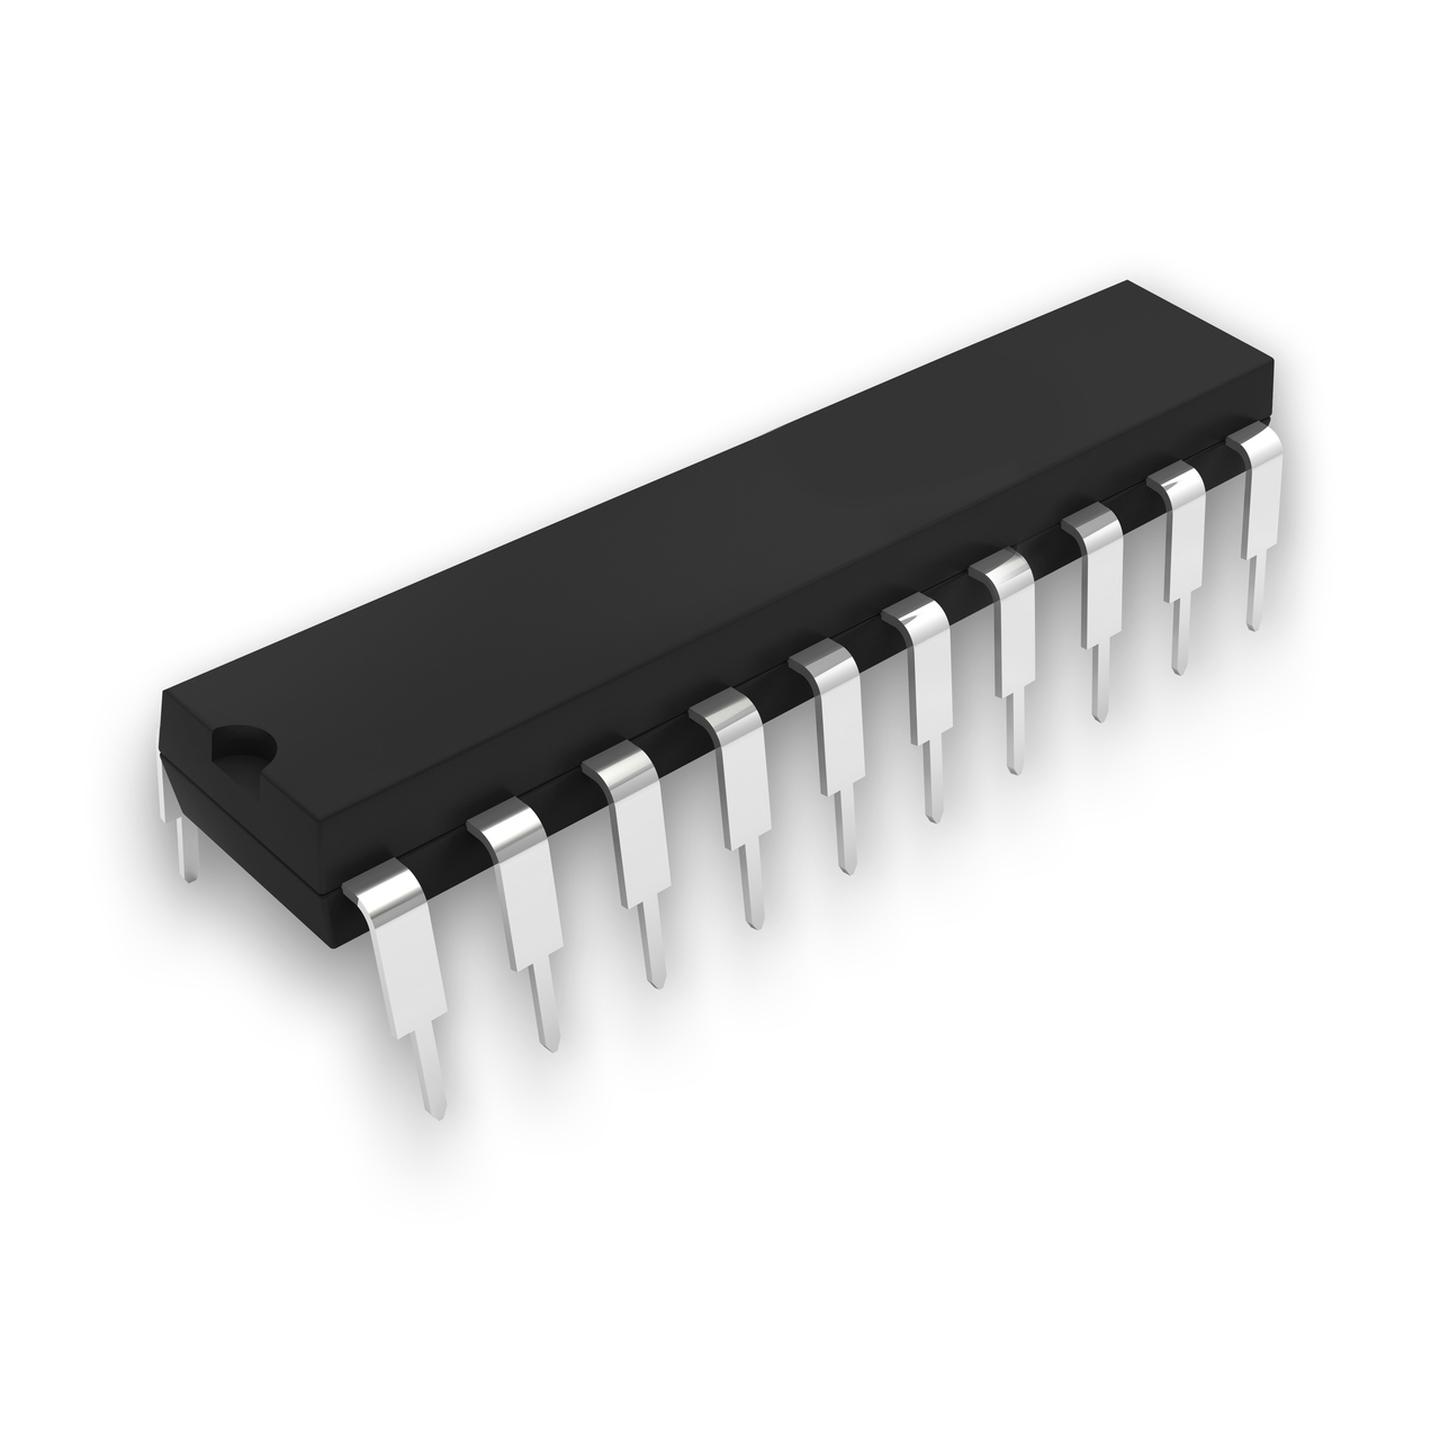 AT90S1200-12PC 8-Bit AVR Microcontroller